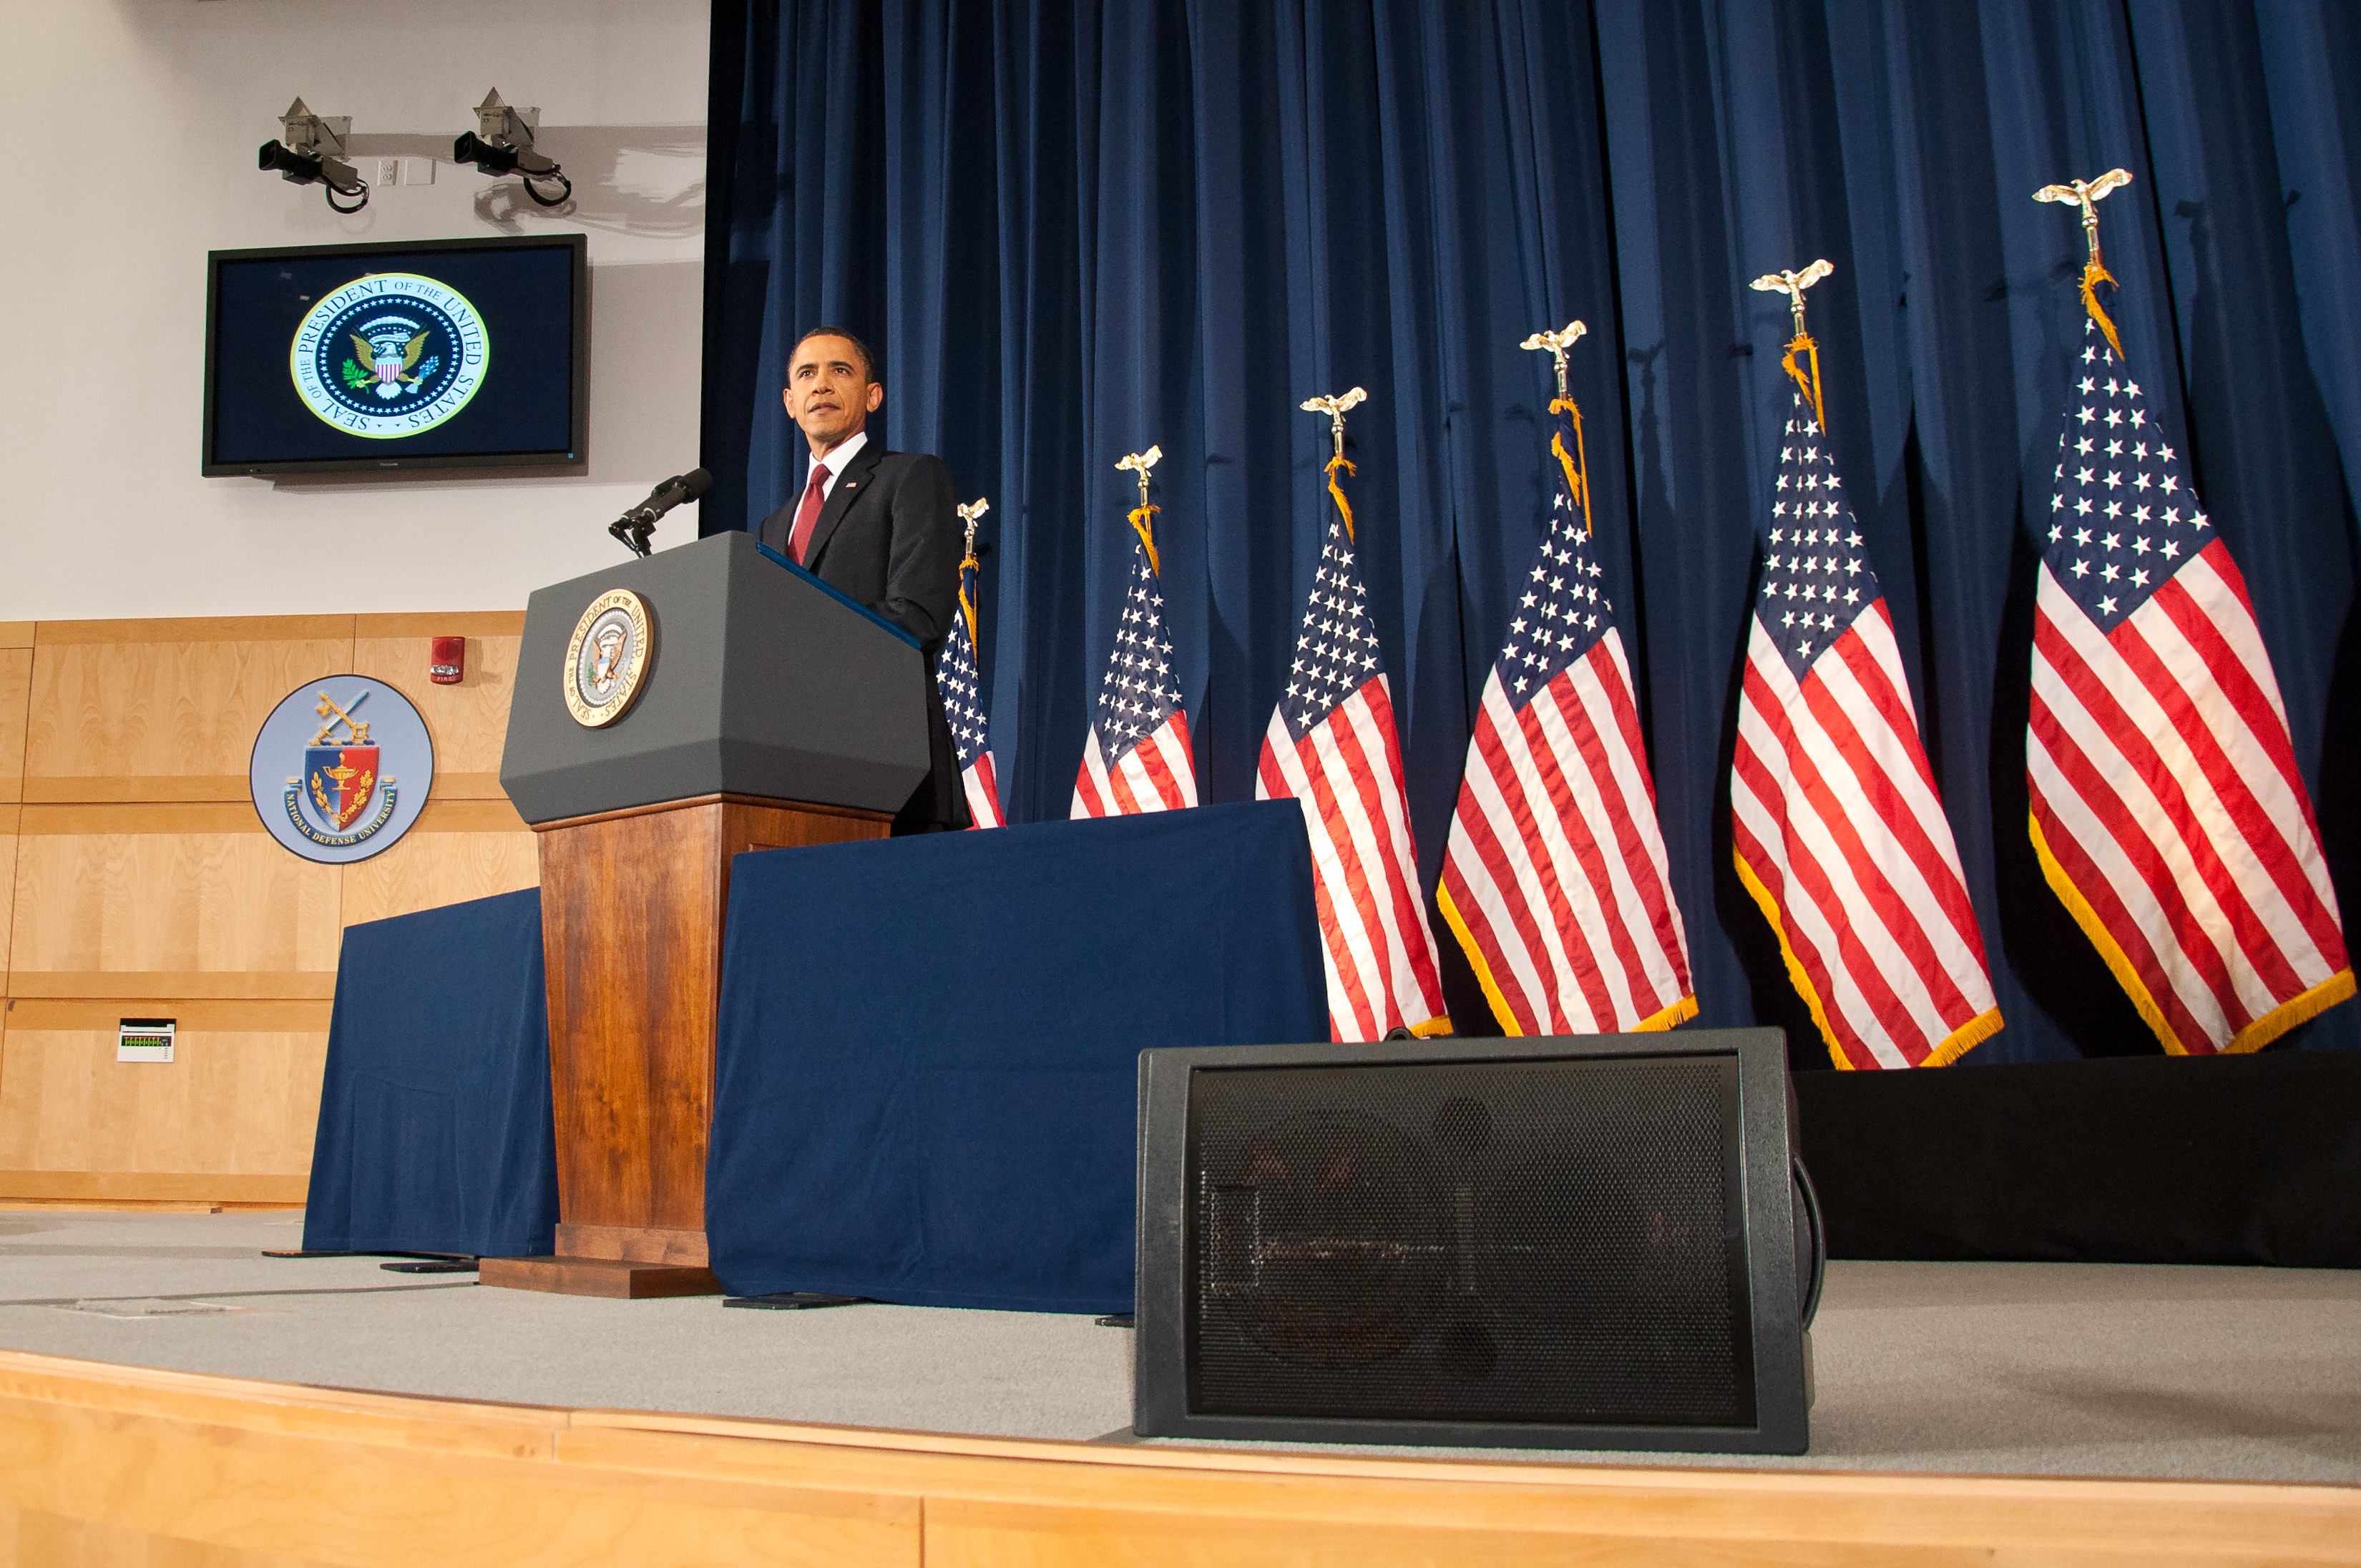 President Barack Obama speaking on the military intervention in Libya at the National Defense University